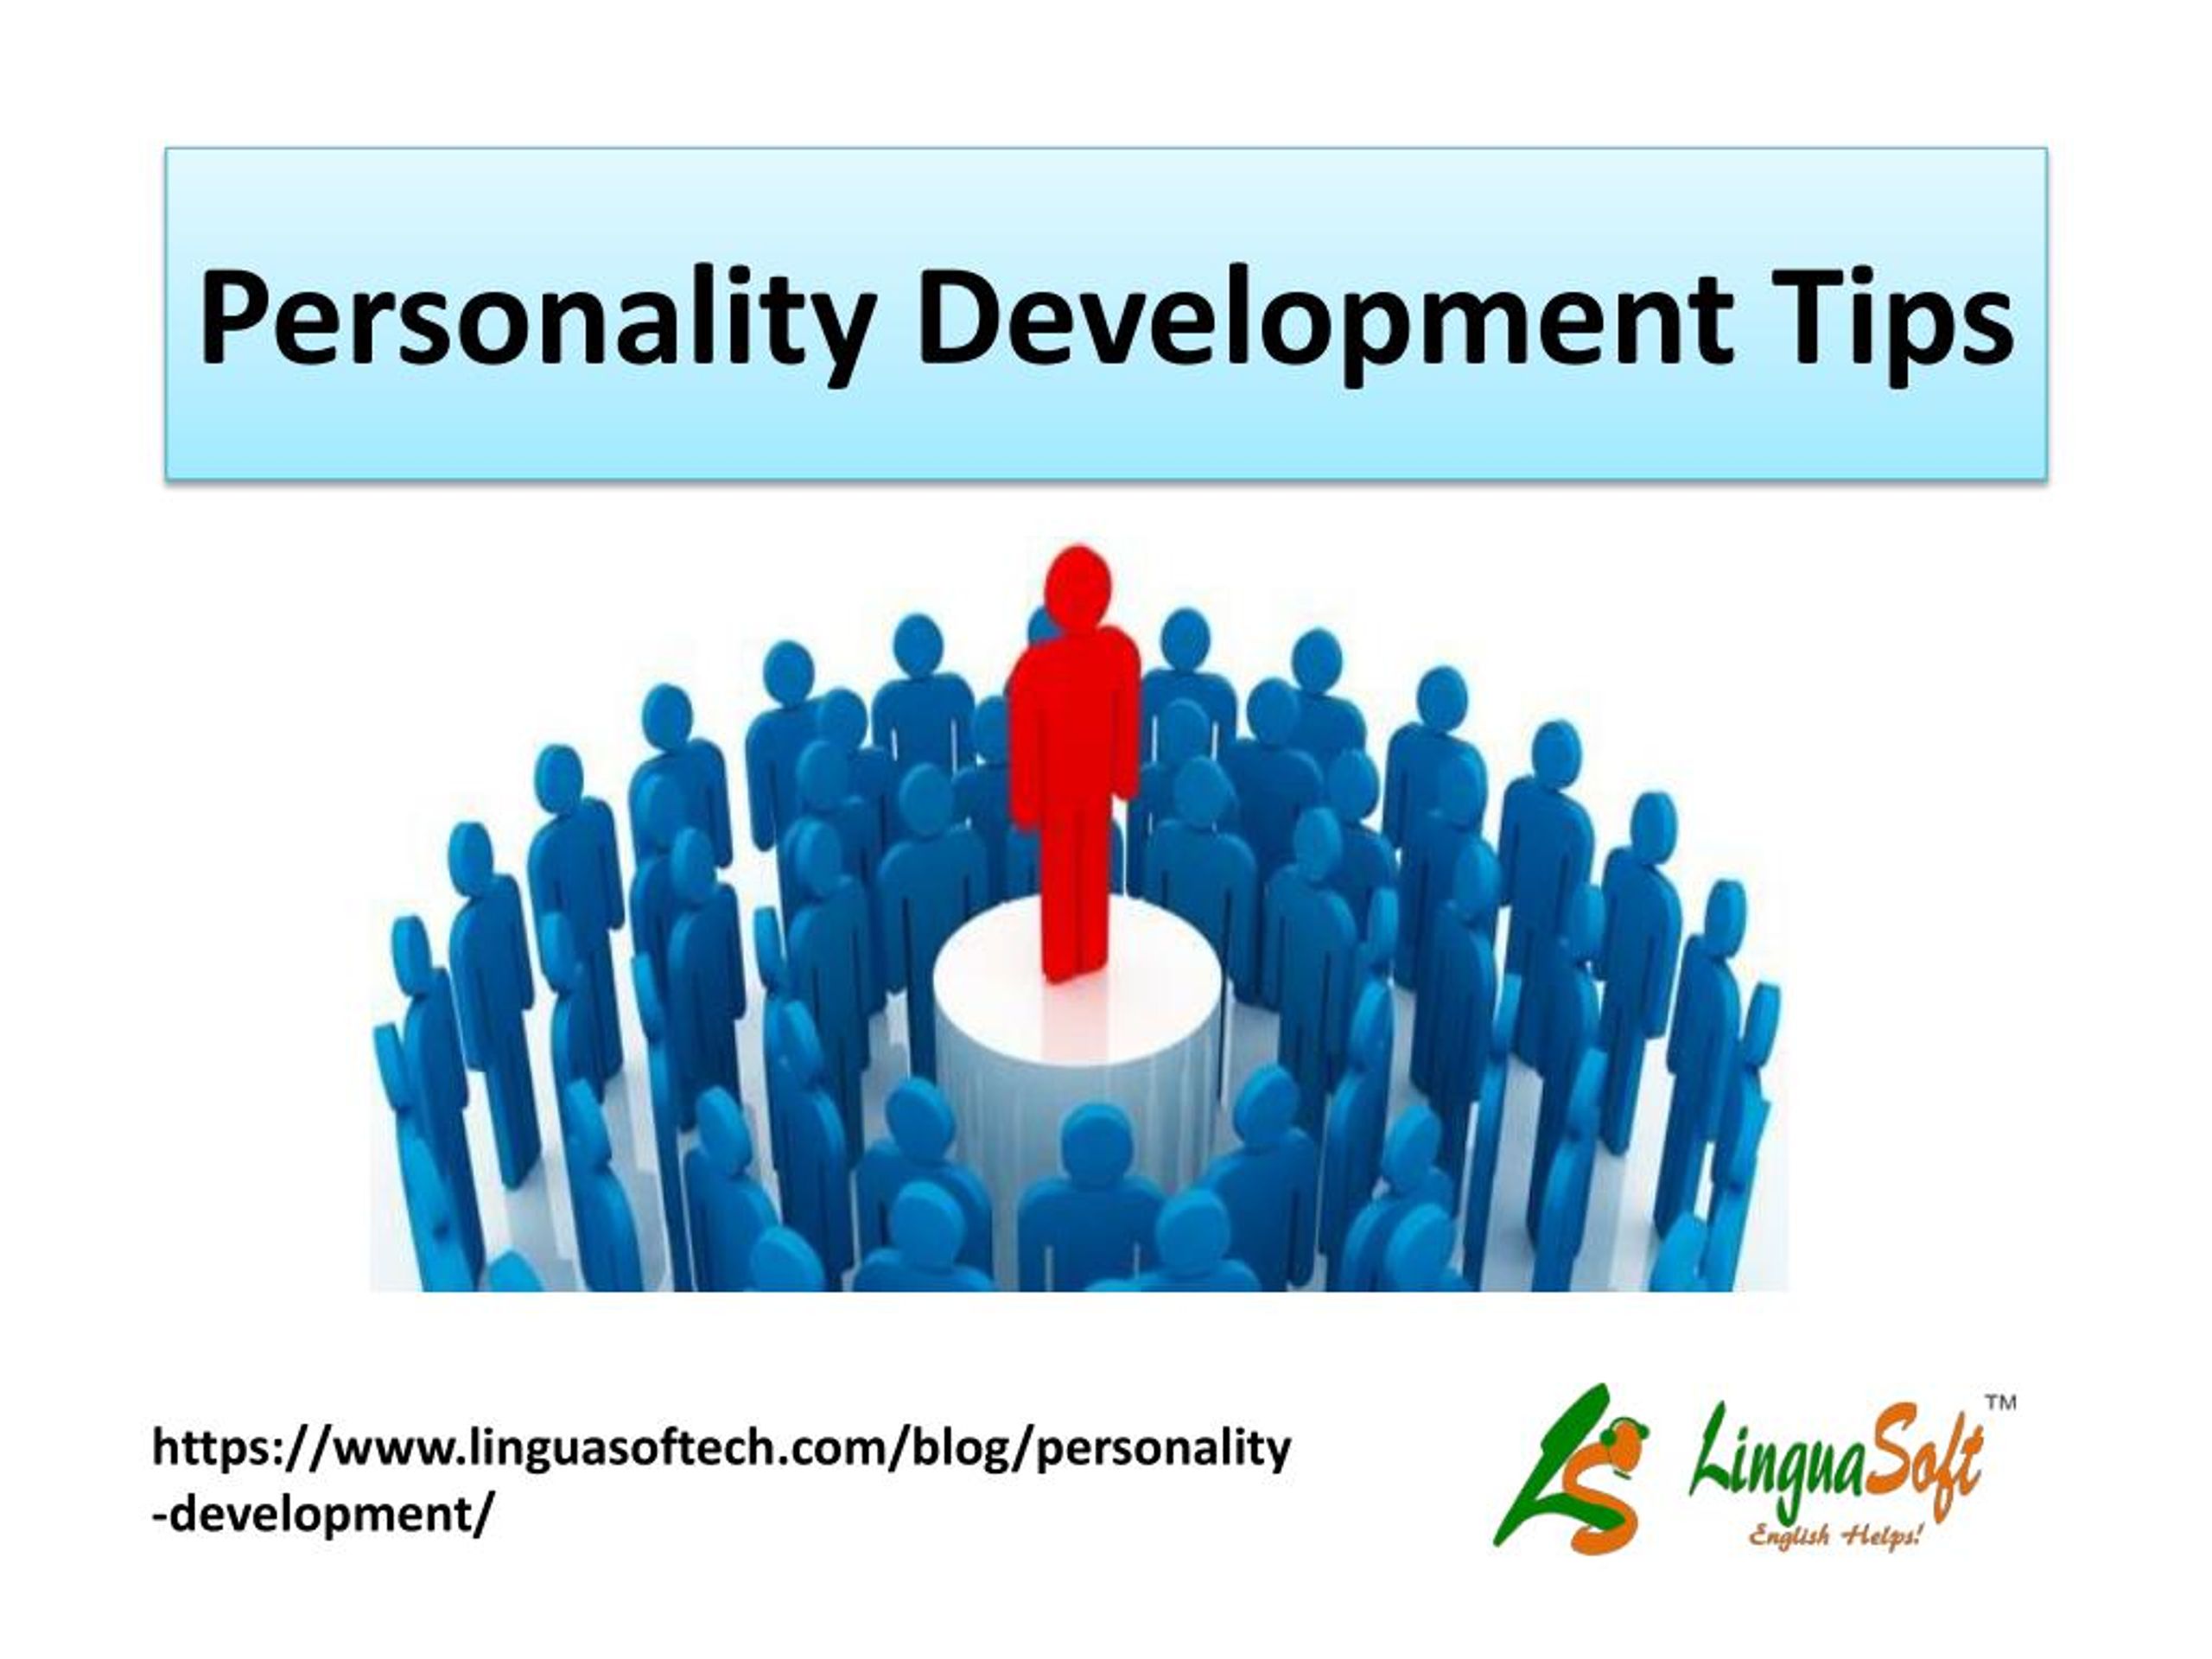 personality development presentation skills